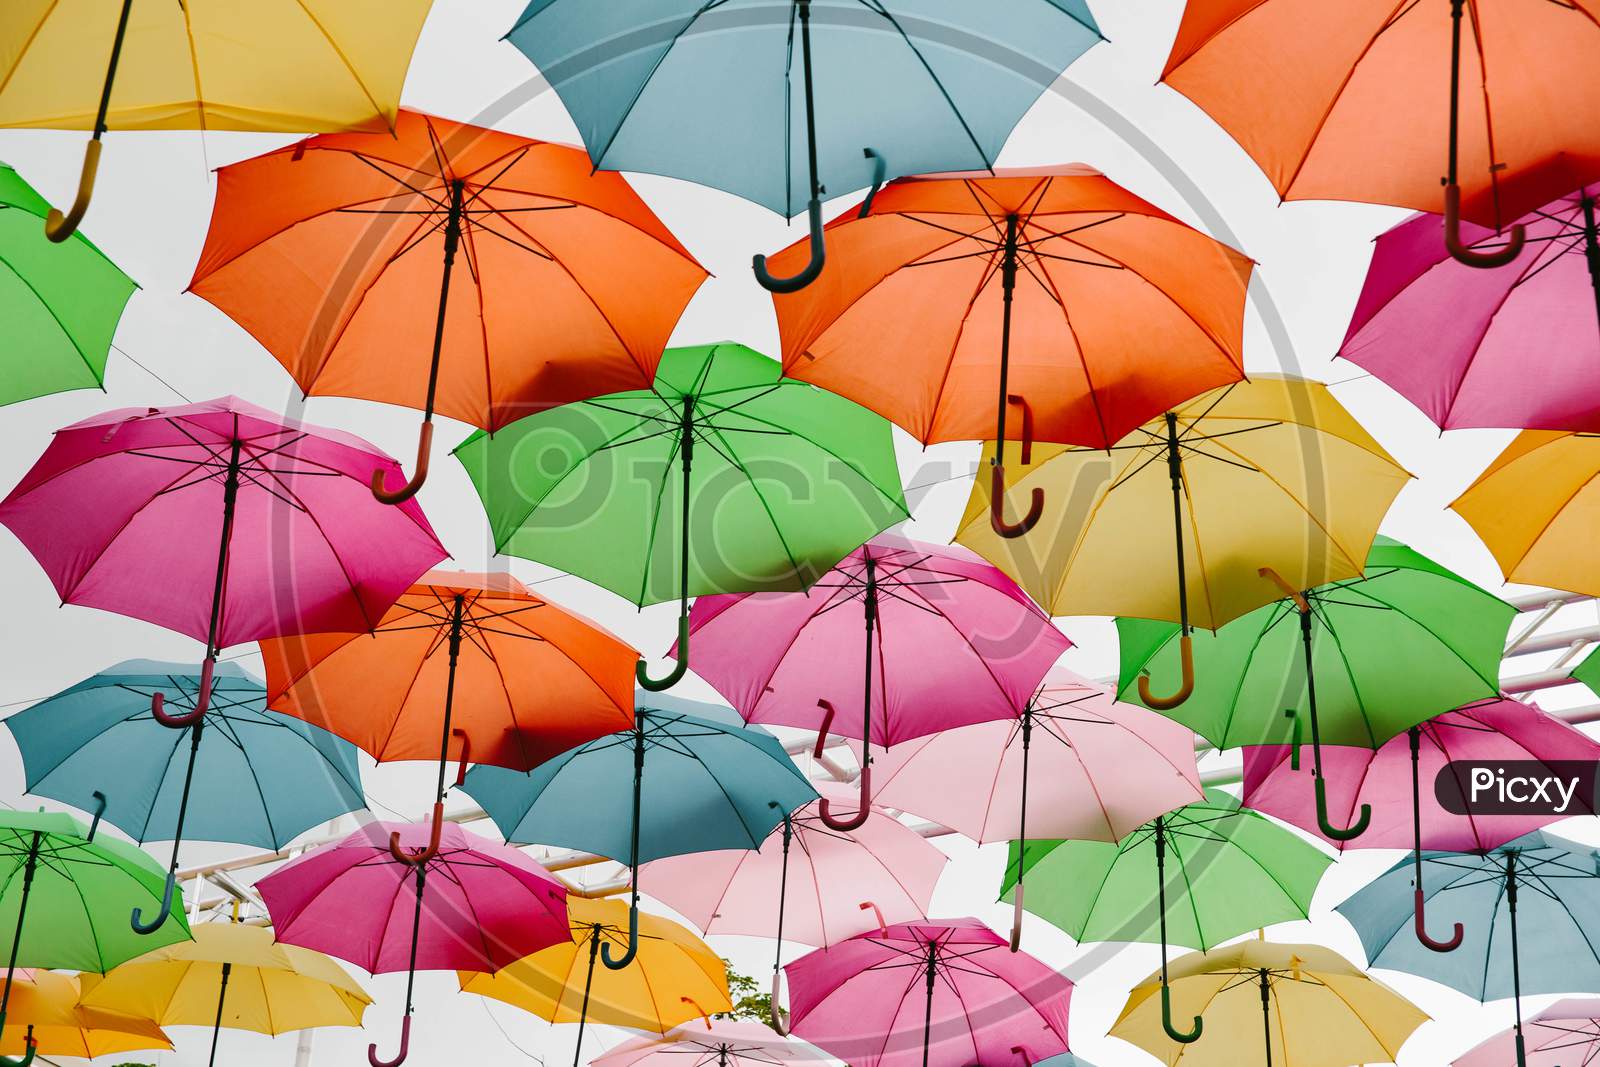 umbrella pattern made in air